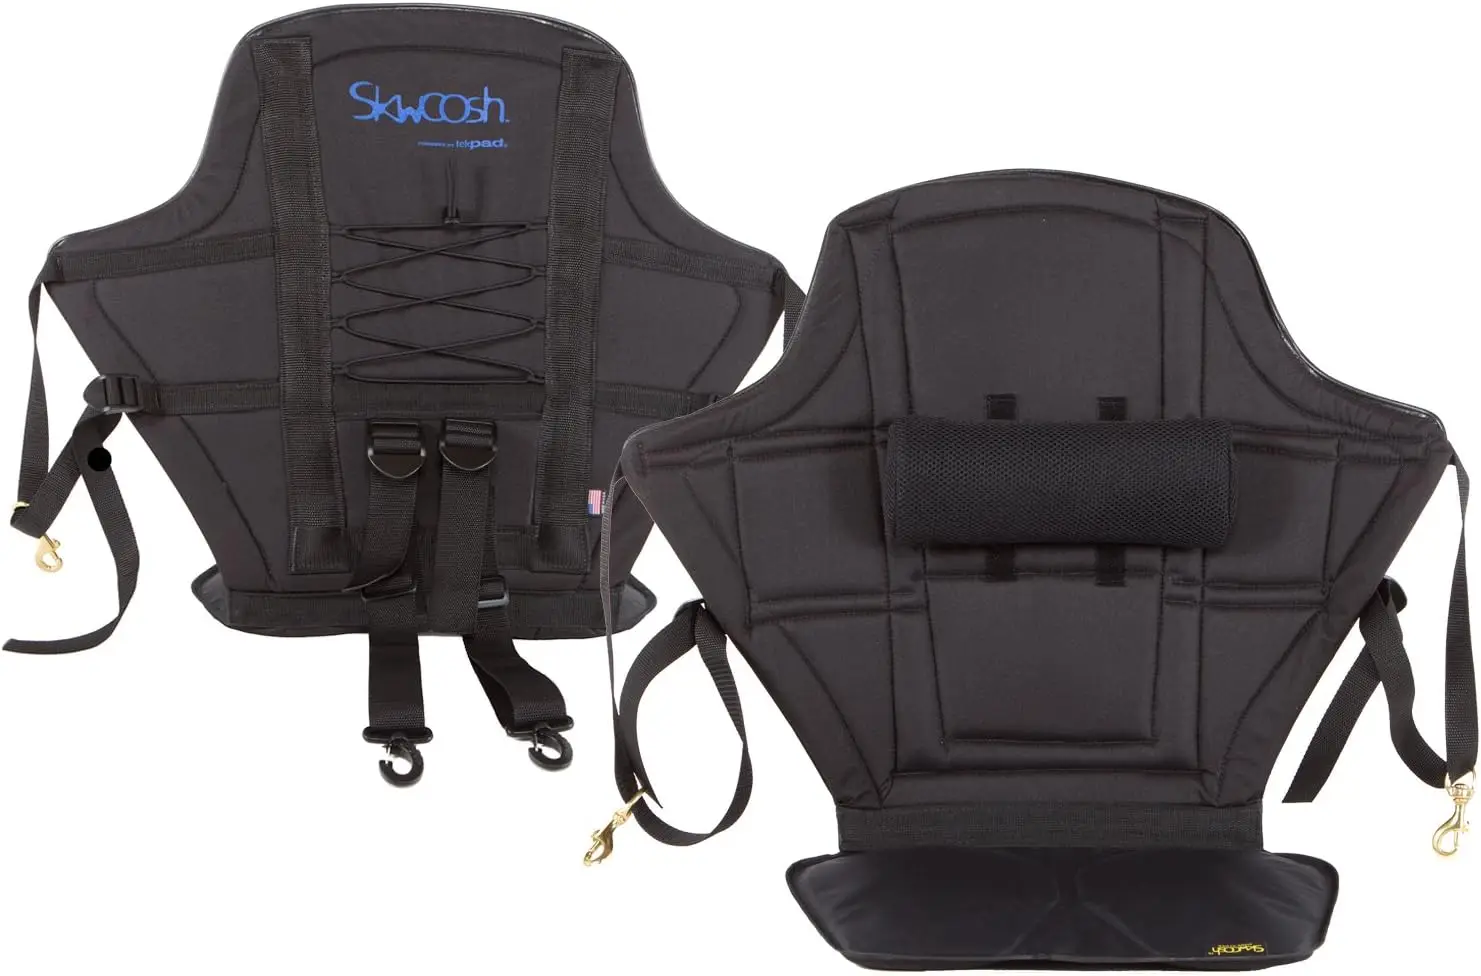 

High Back Kayak Seat with Lumbar Roll and Gel Seat Cushion for kayaking comfort the USA Exercise mat Foam roller yoga Spiritua